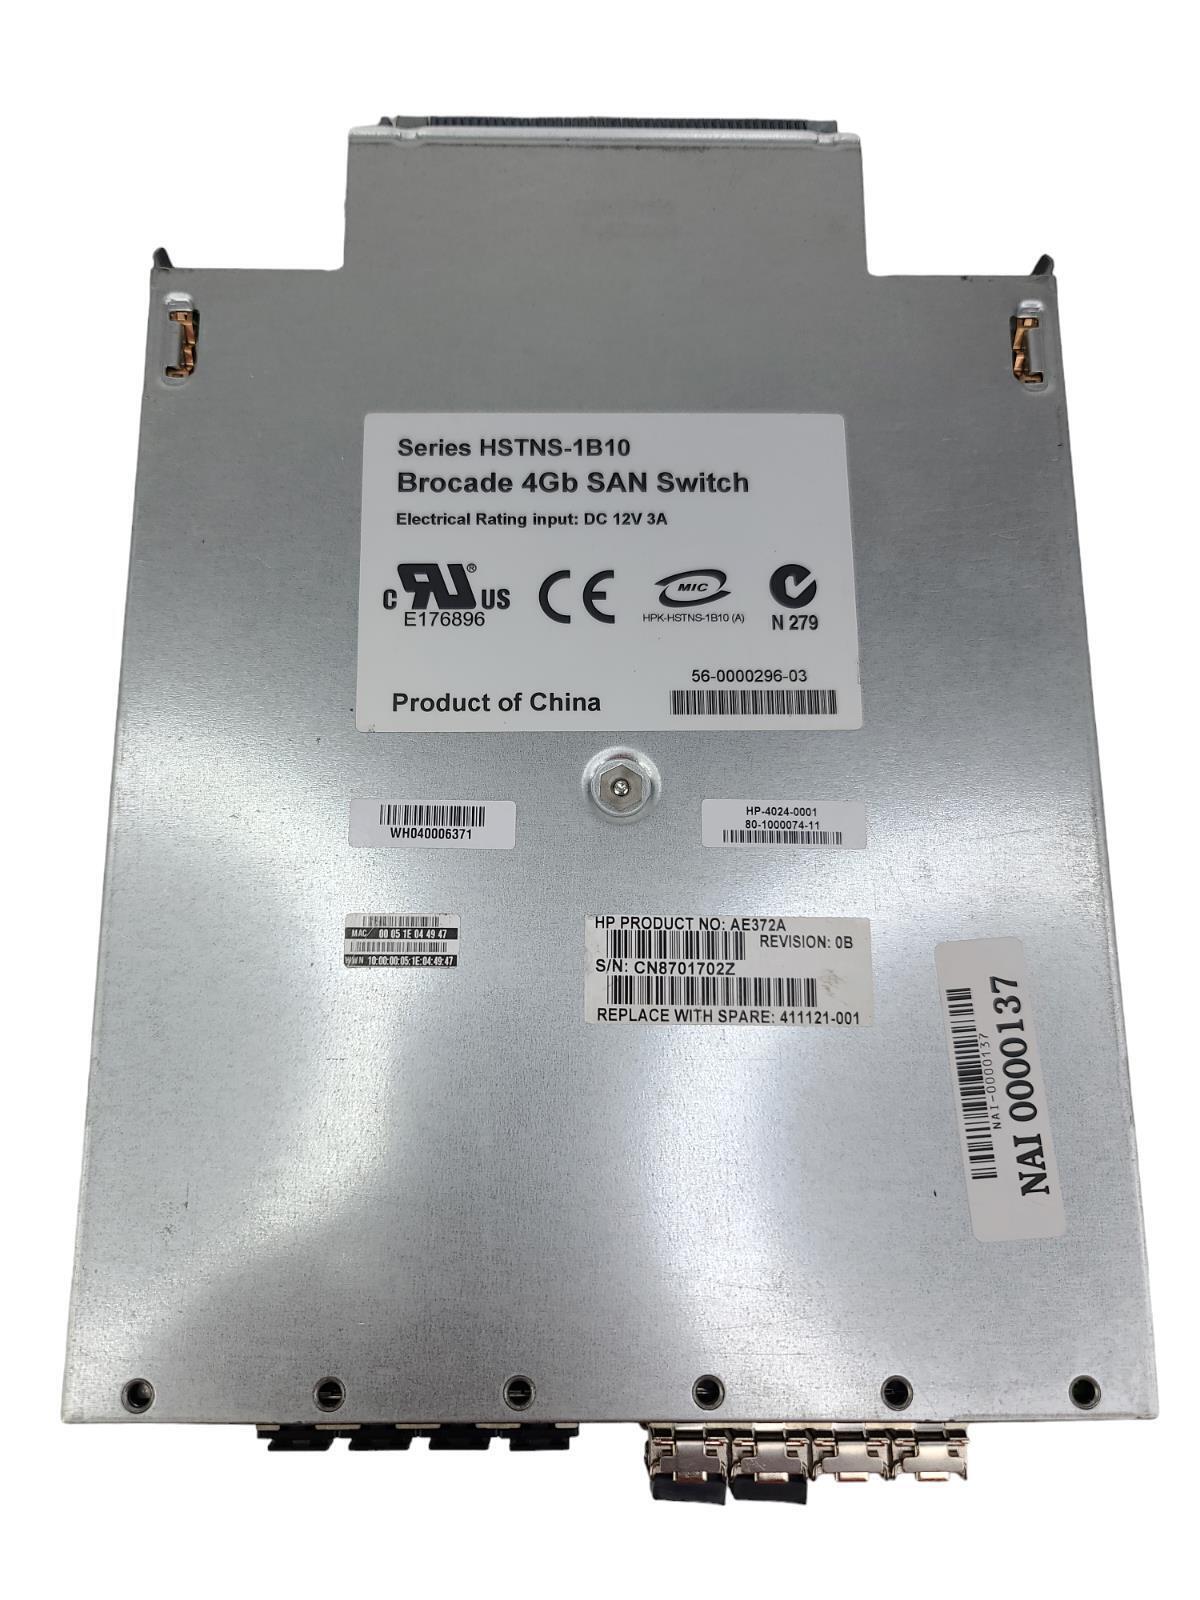 HP 411121-001 Brocade 4GB SAN Switch Series HSTNS-1B10 AE372A